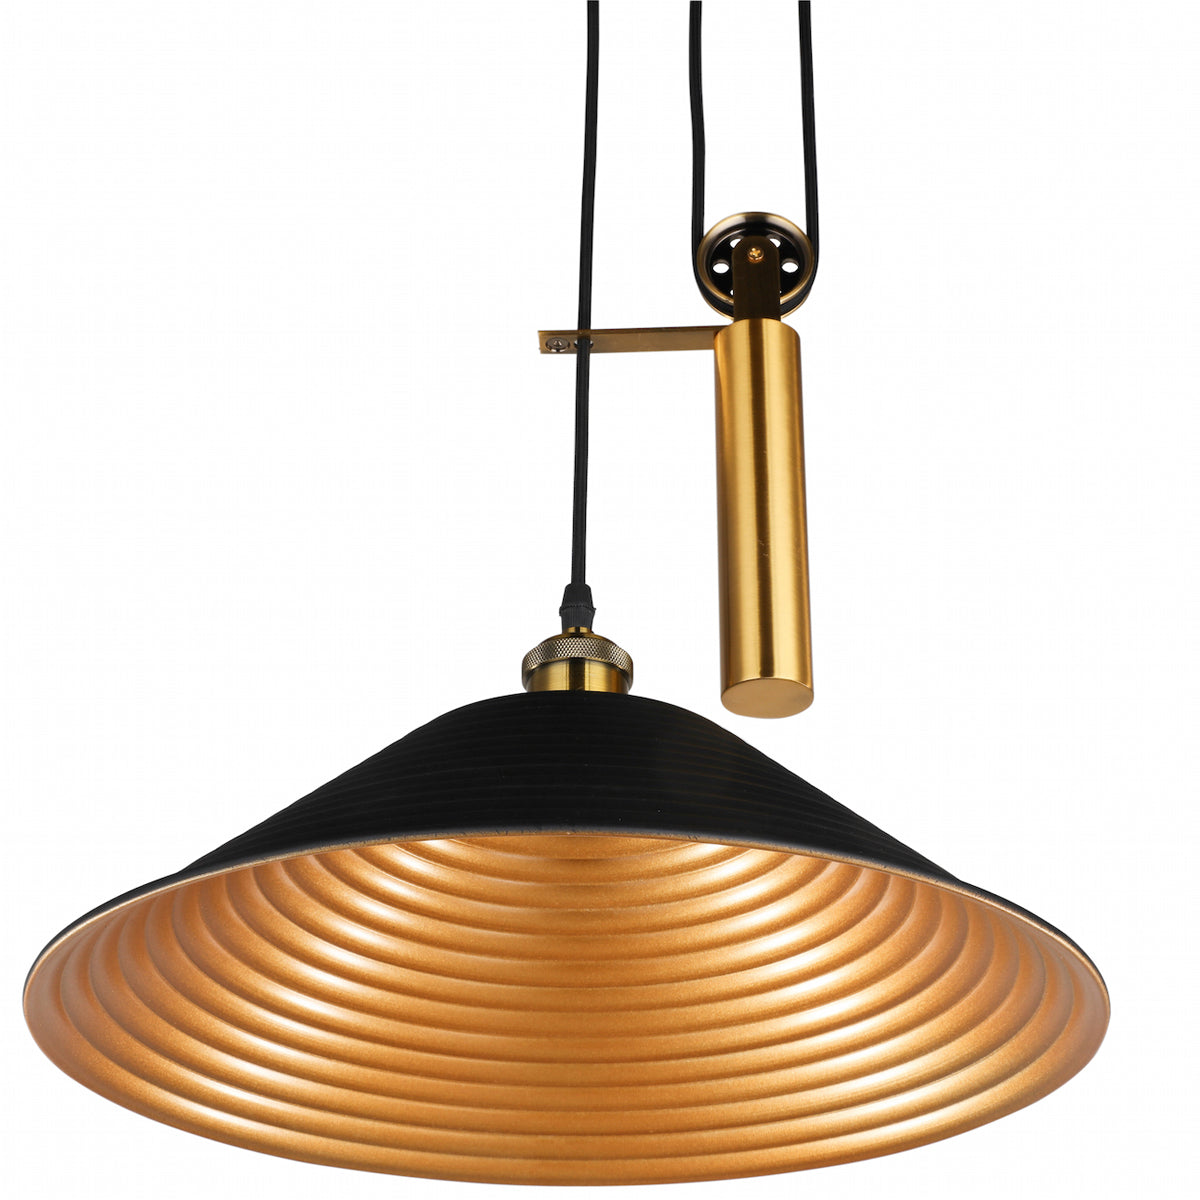 CGC MELISSA Black & Gold Counter Balance Pendant Lamp